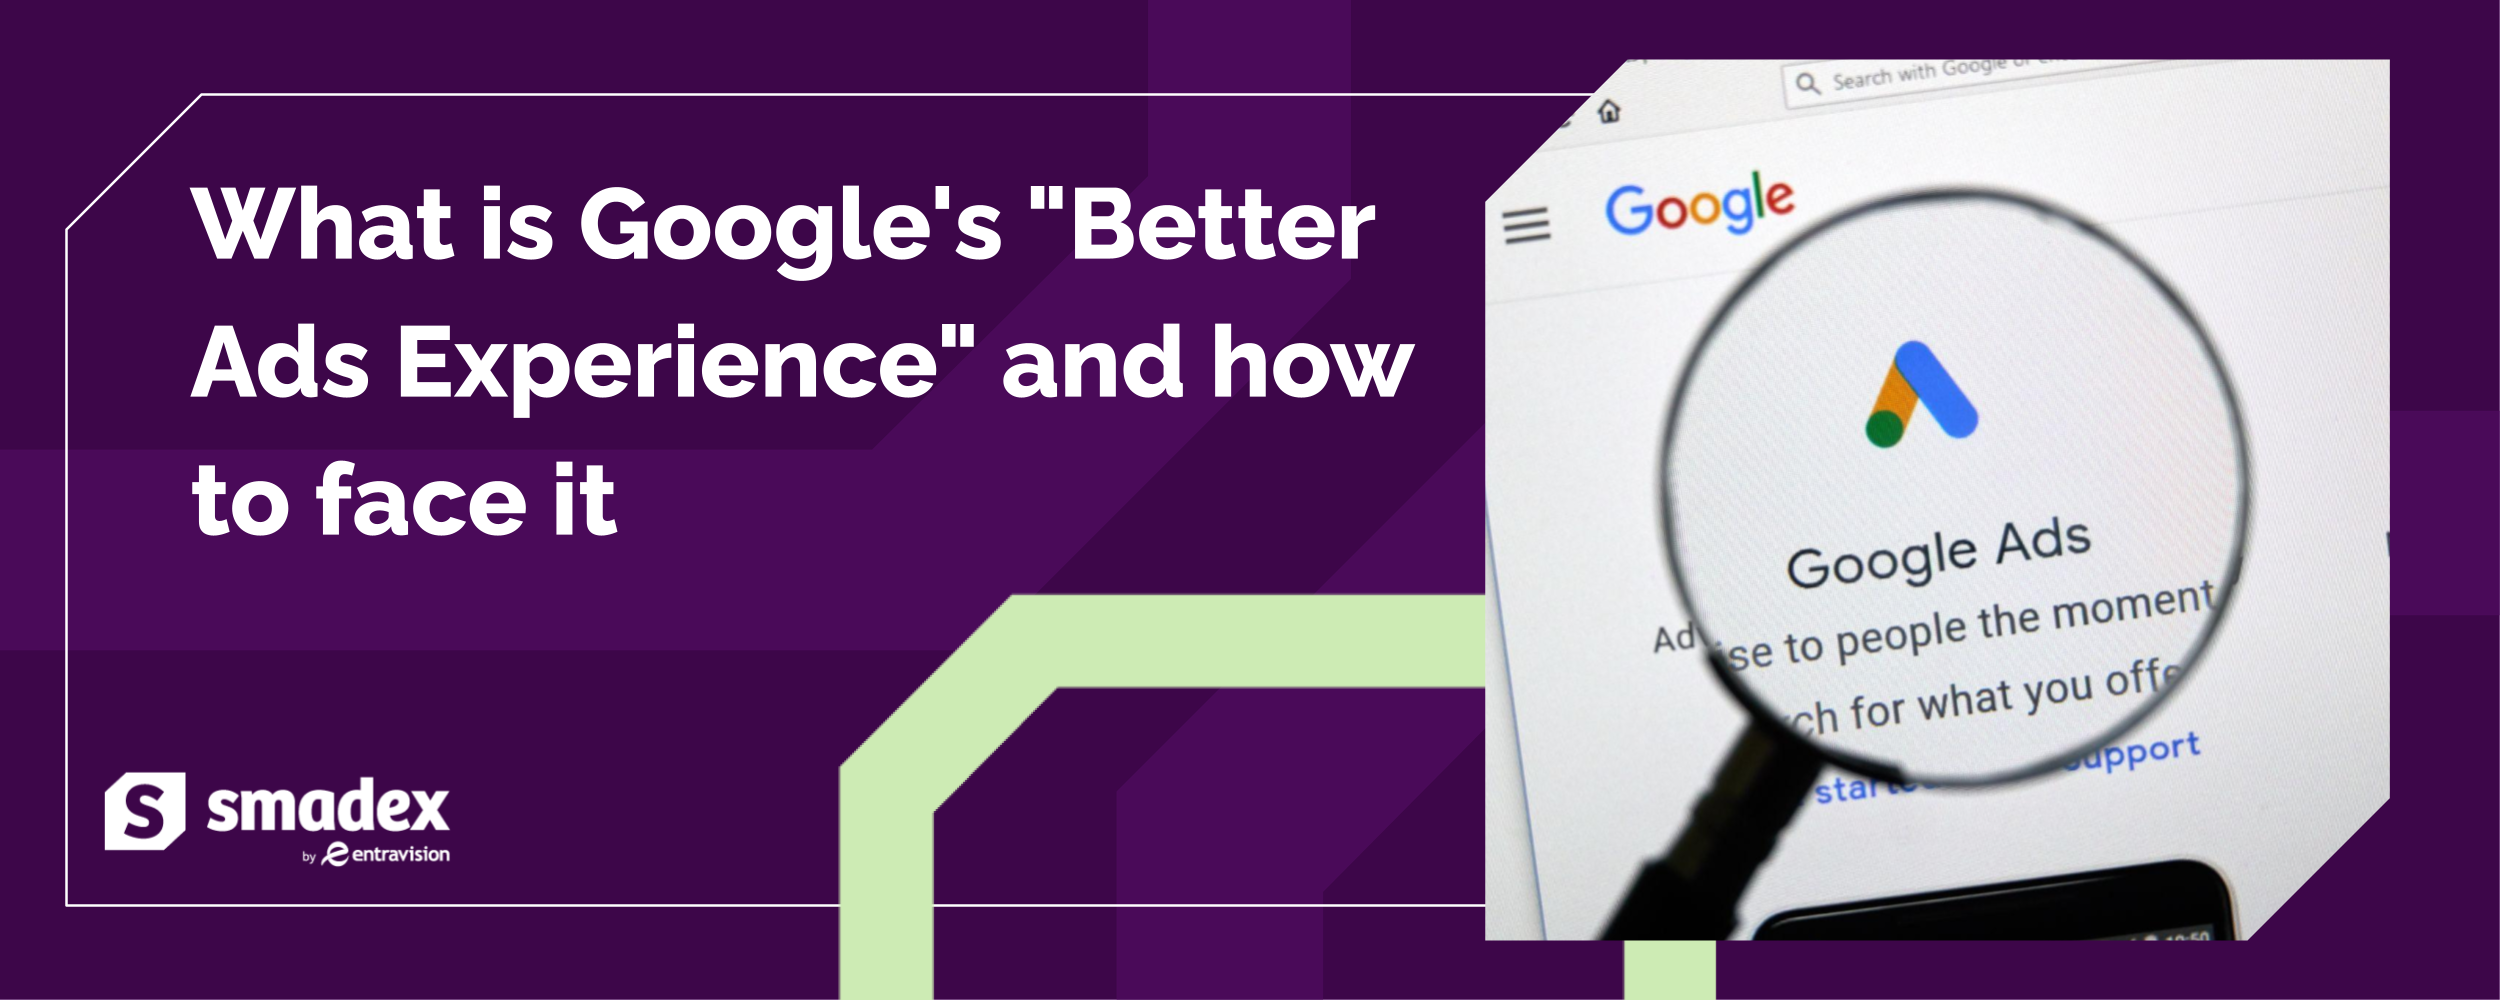 google-better-ads-experience